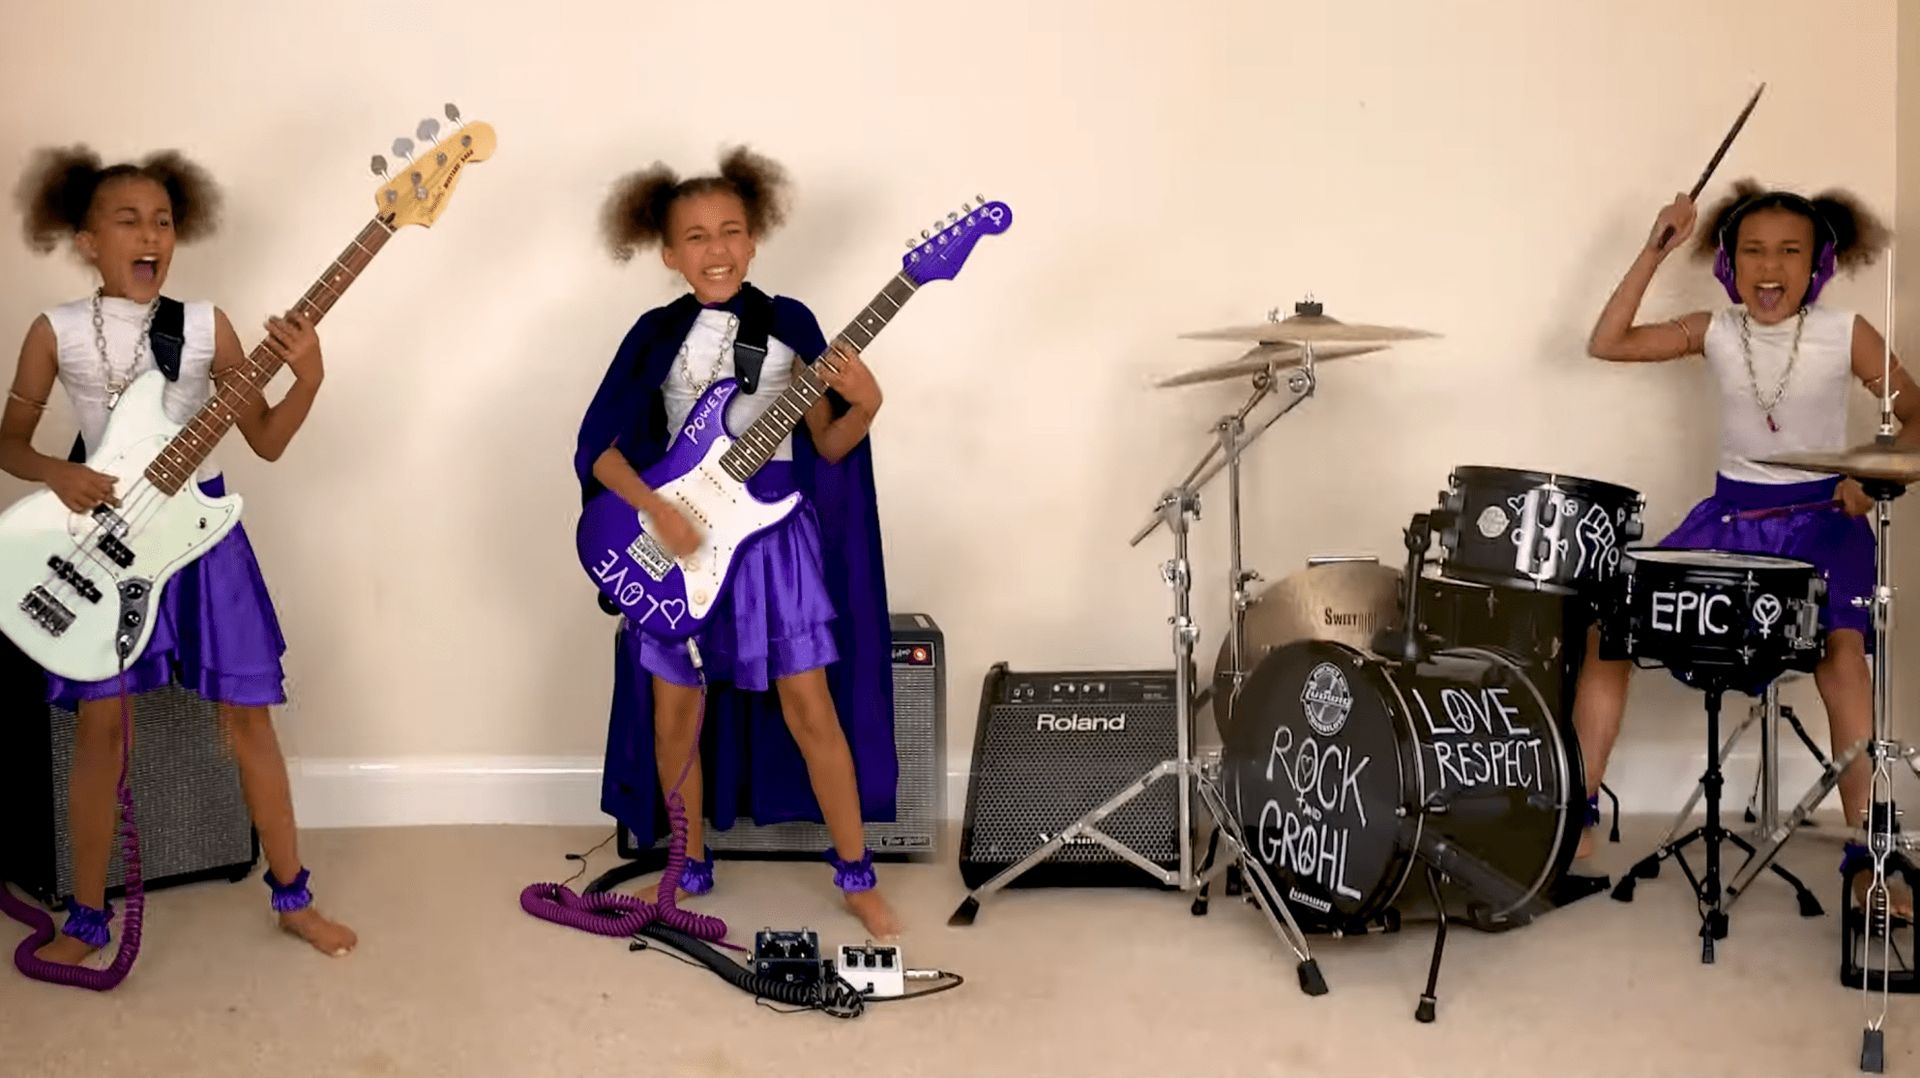 [Zapping 21] "Rock And Grohl": Nandi Bushell (10 ans) répond à Dave Grohl avec un titre original 